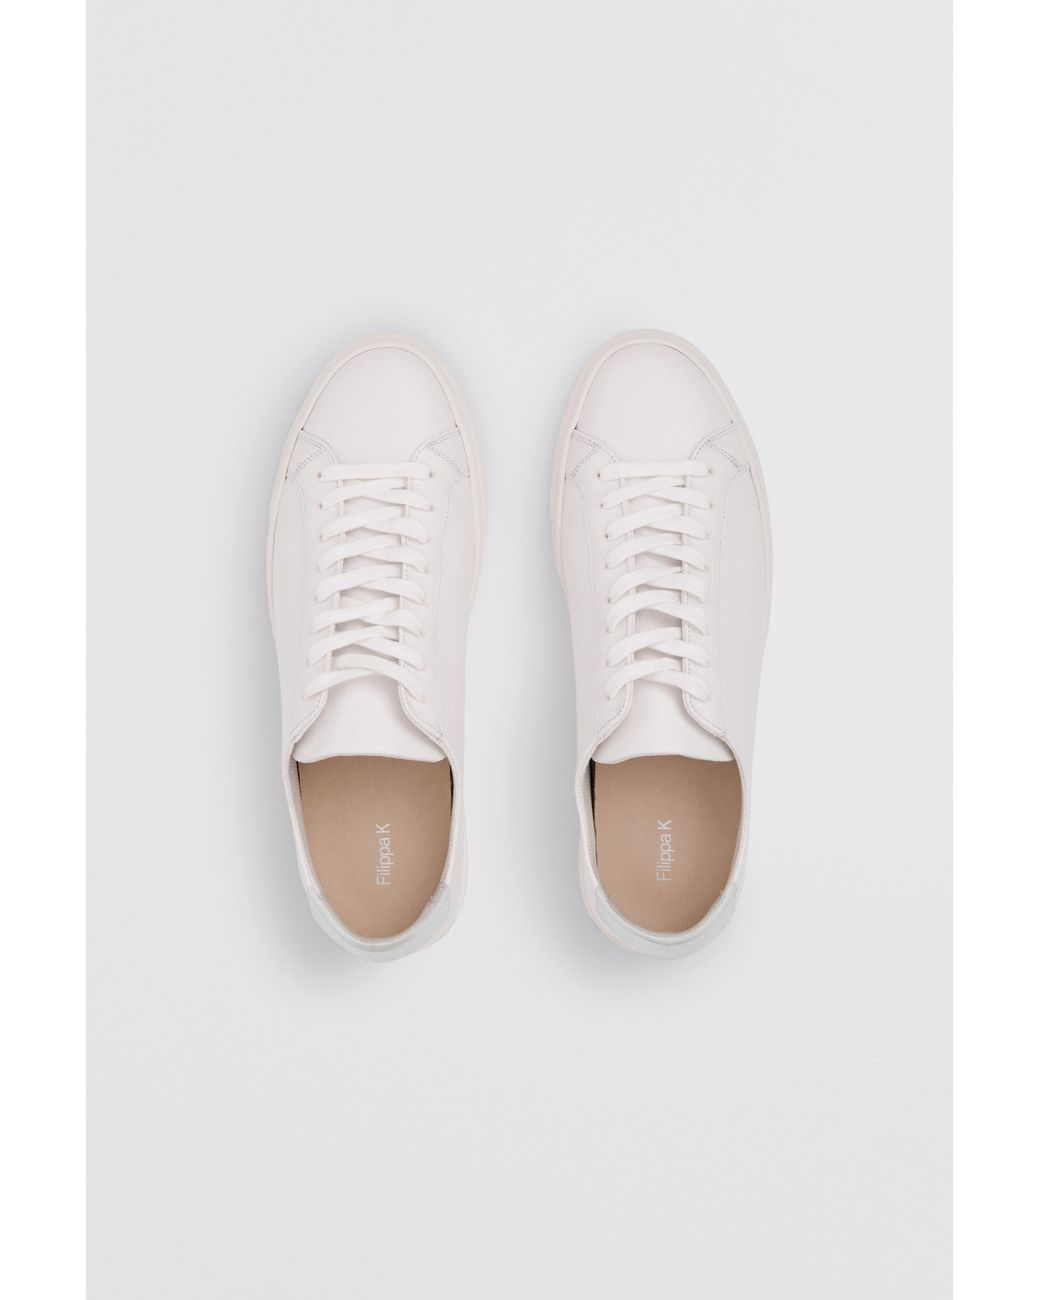 Filippa K Leather Morgan Sneaker in White for Men - Lyst